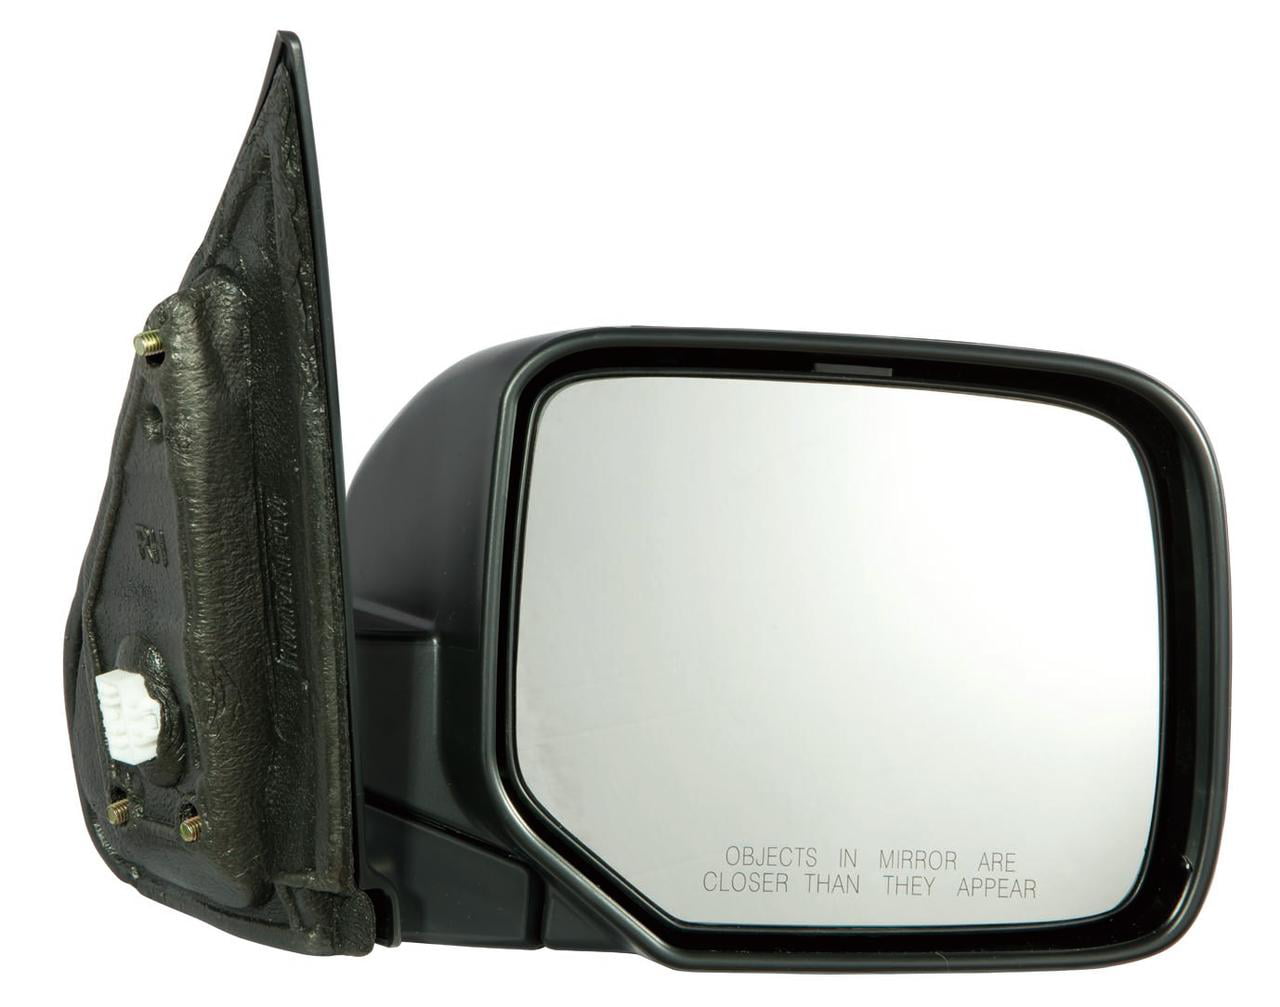 2011 Honda Pilot Passenger Side Mirror Replacement